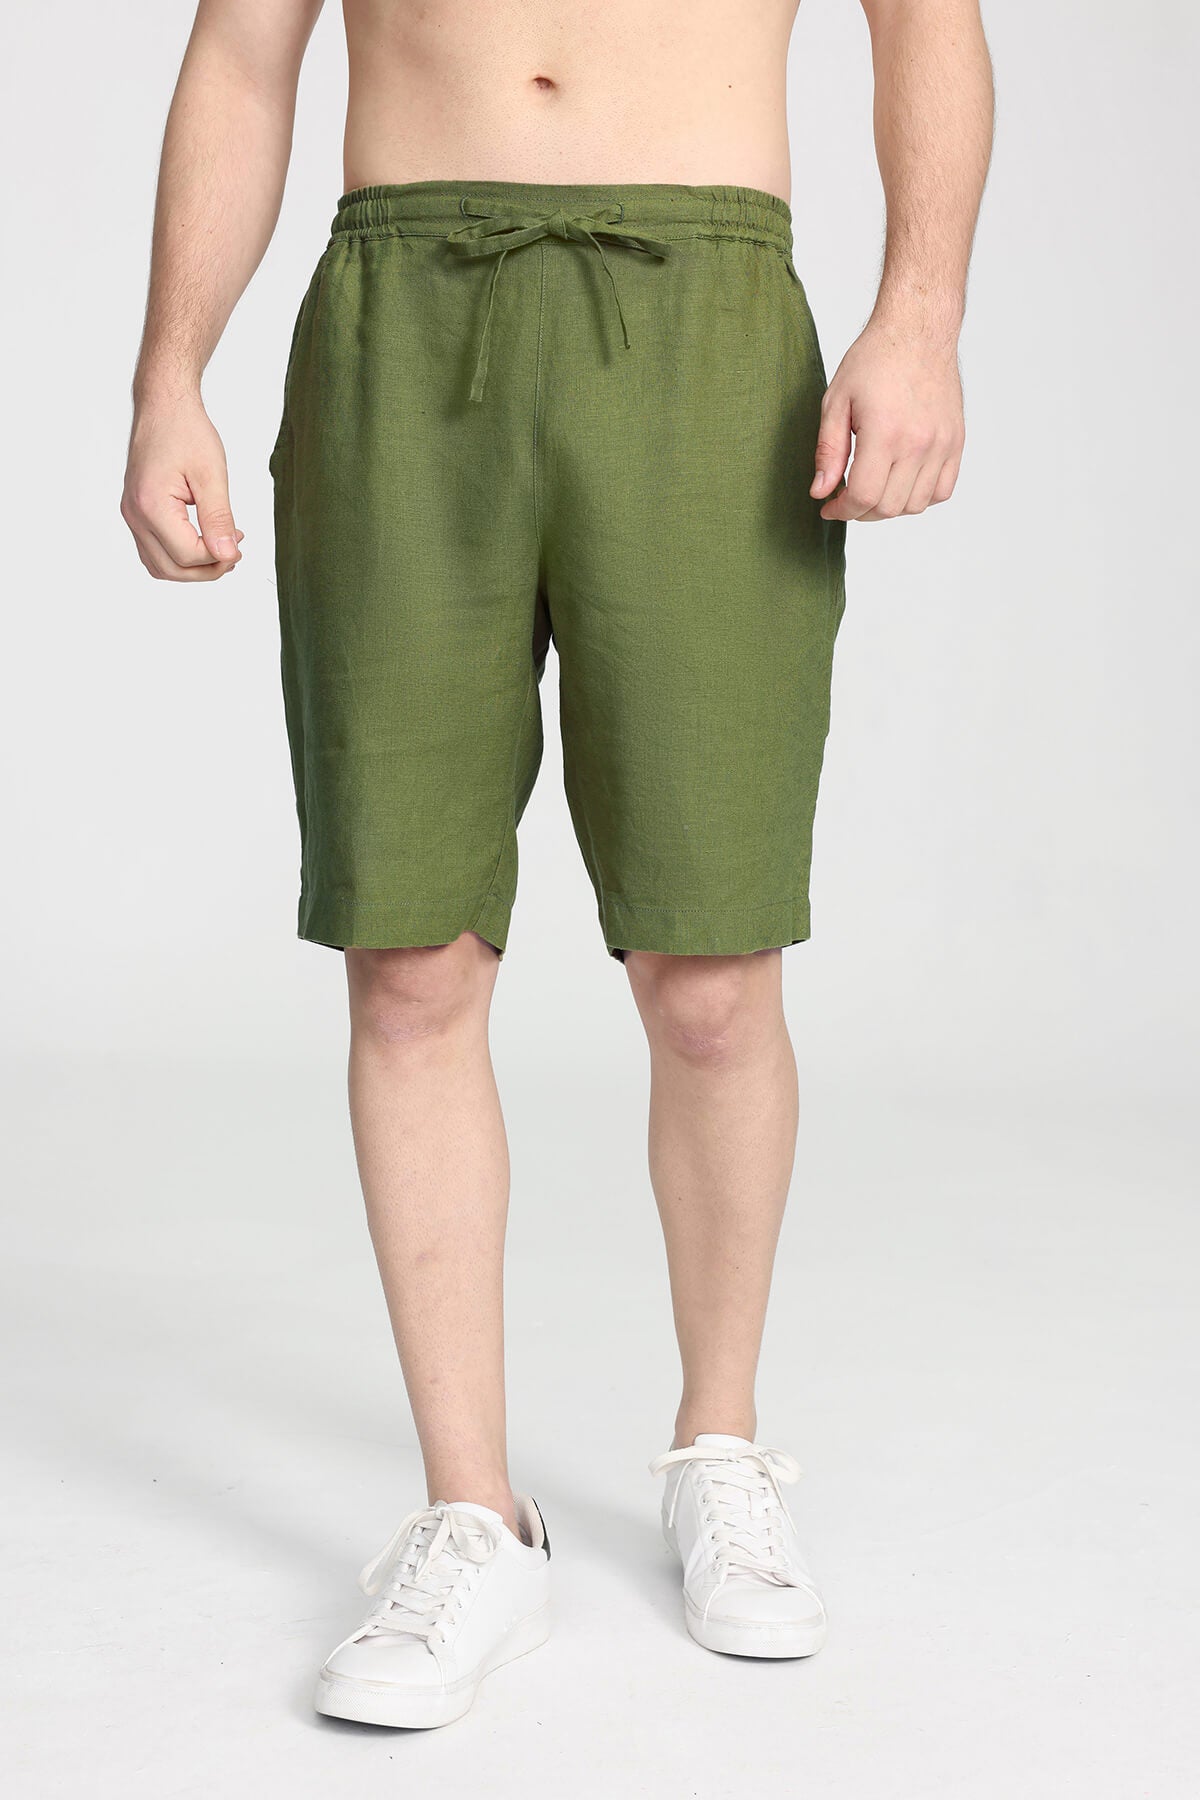 Ecoer- Men's 100% Organic Linen Breathable Shorts Causal Beach